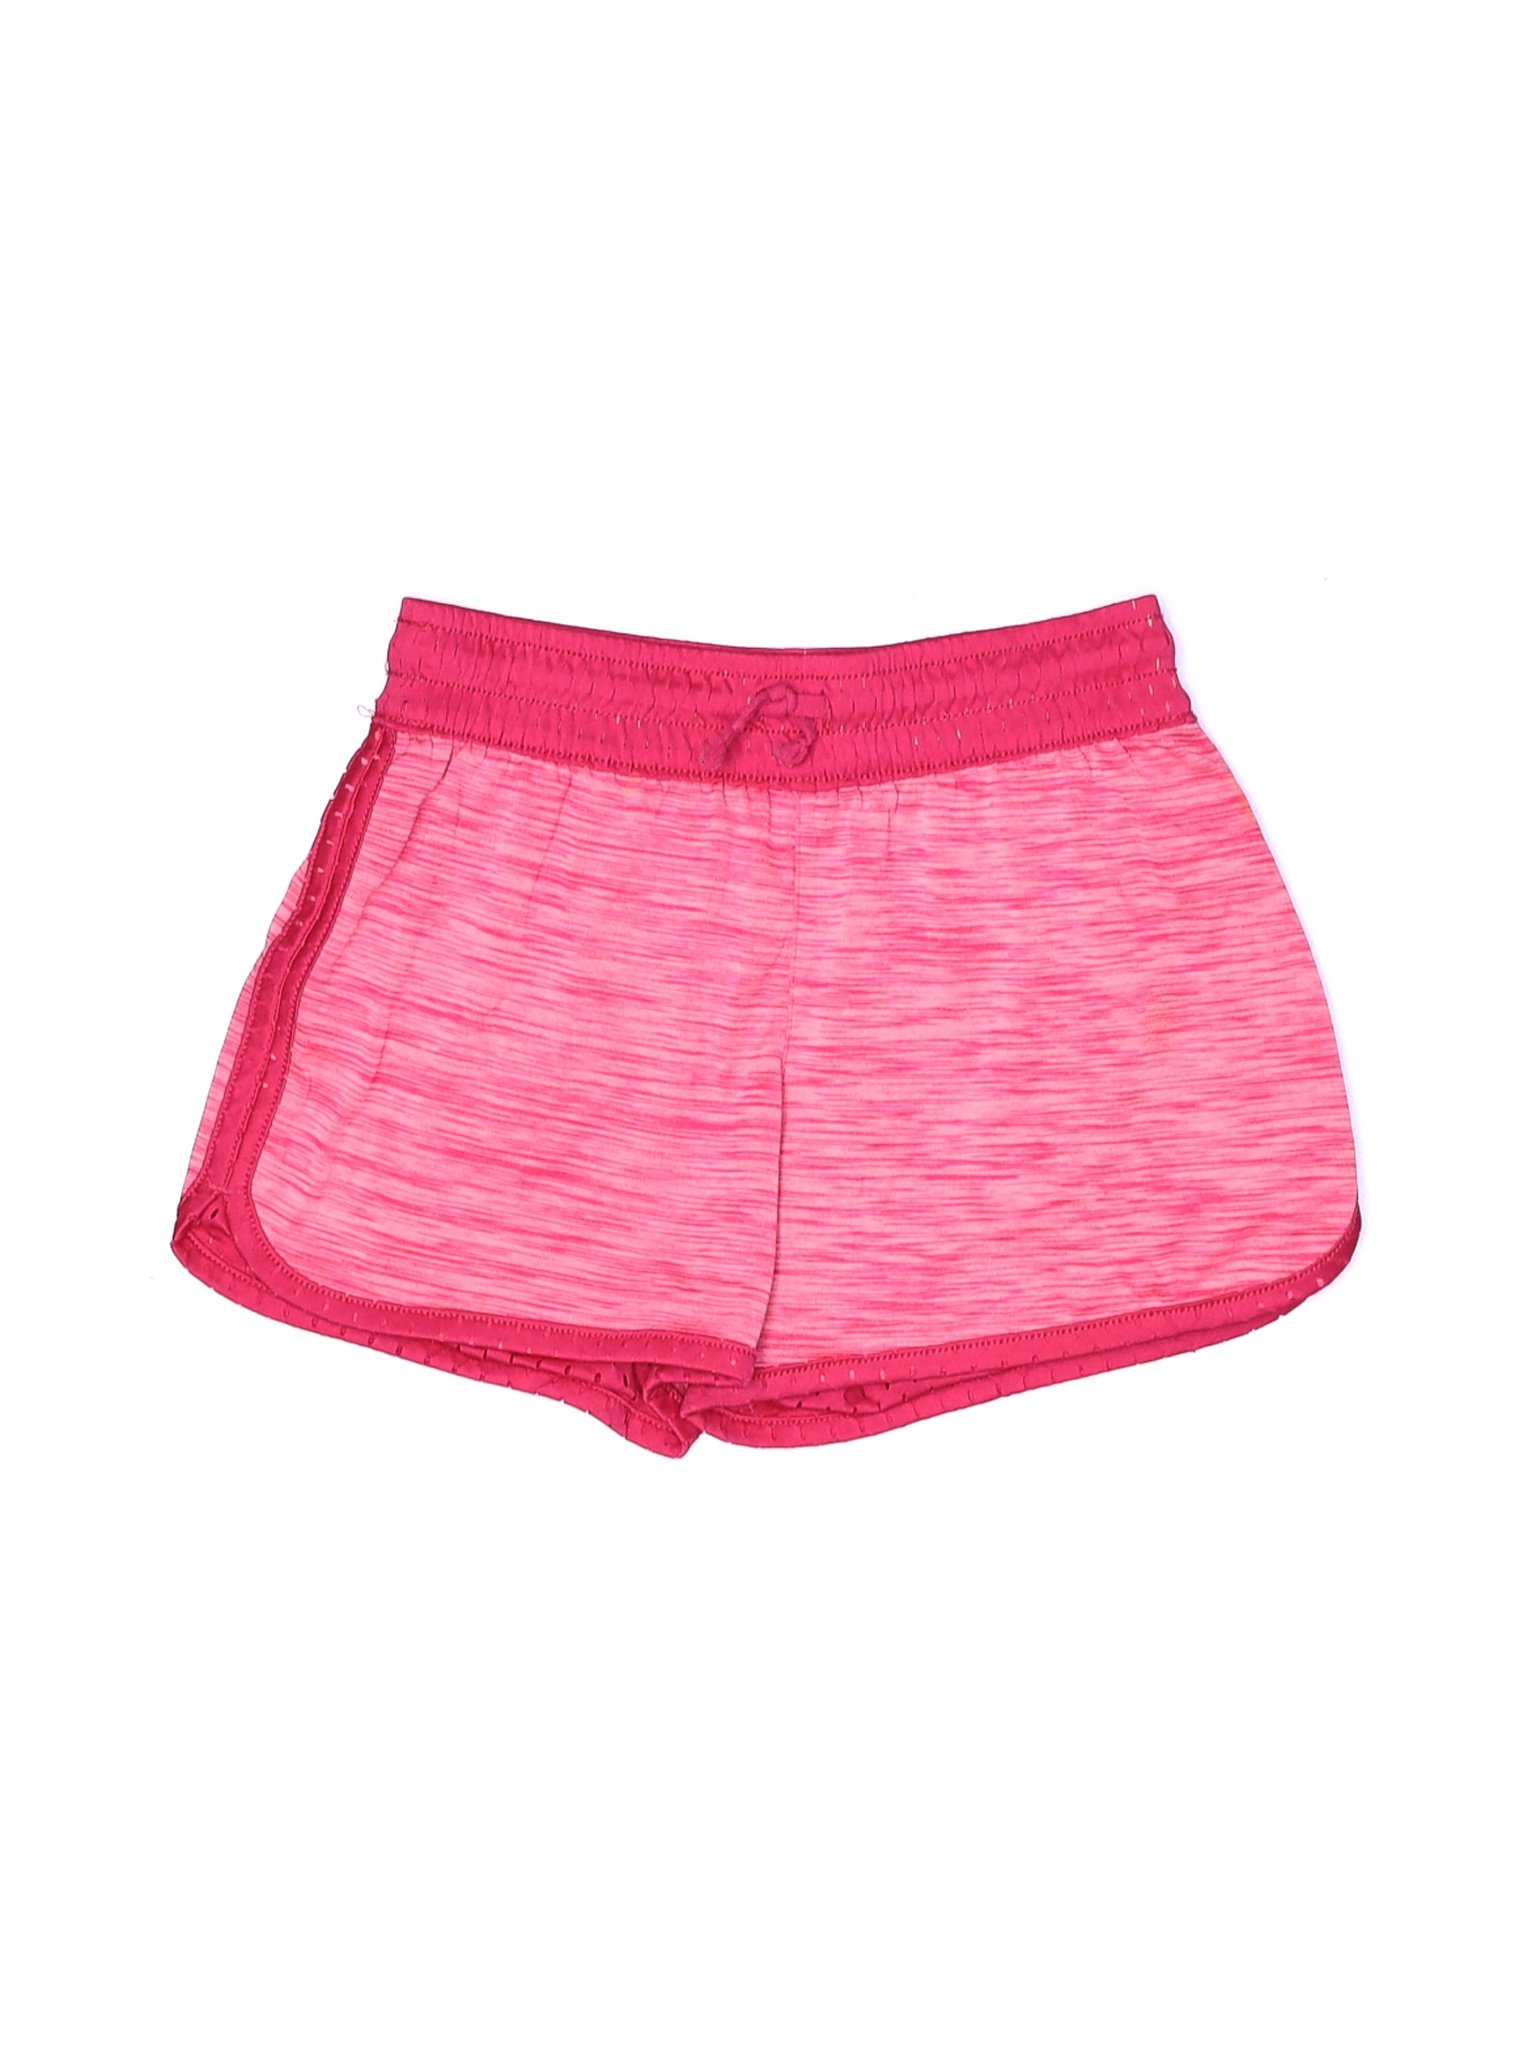 Athletic Works Girls Pink Athletic Shorts M Youth | eBay